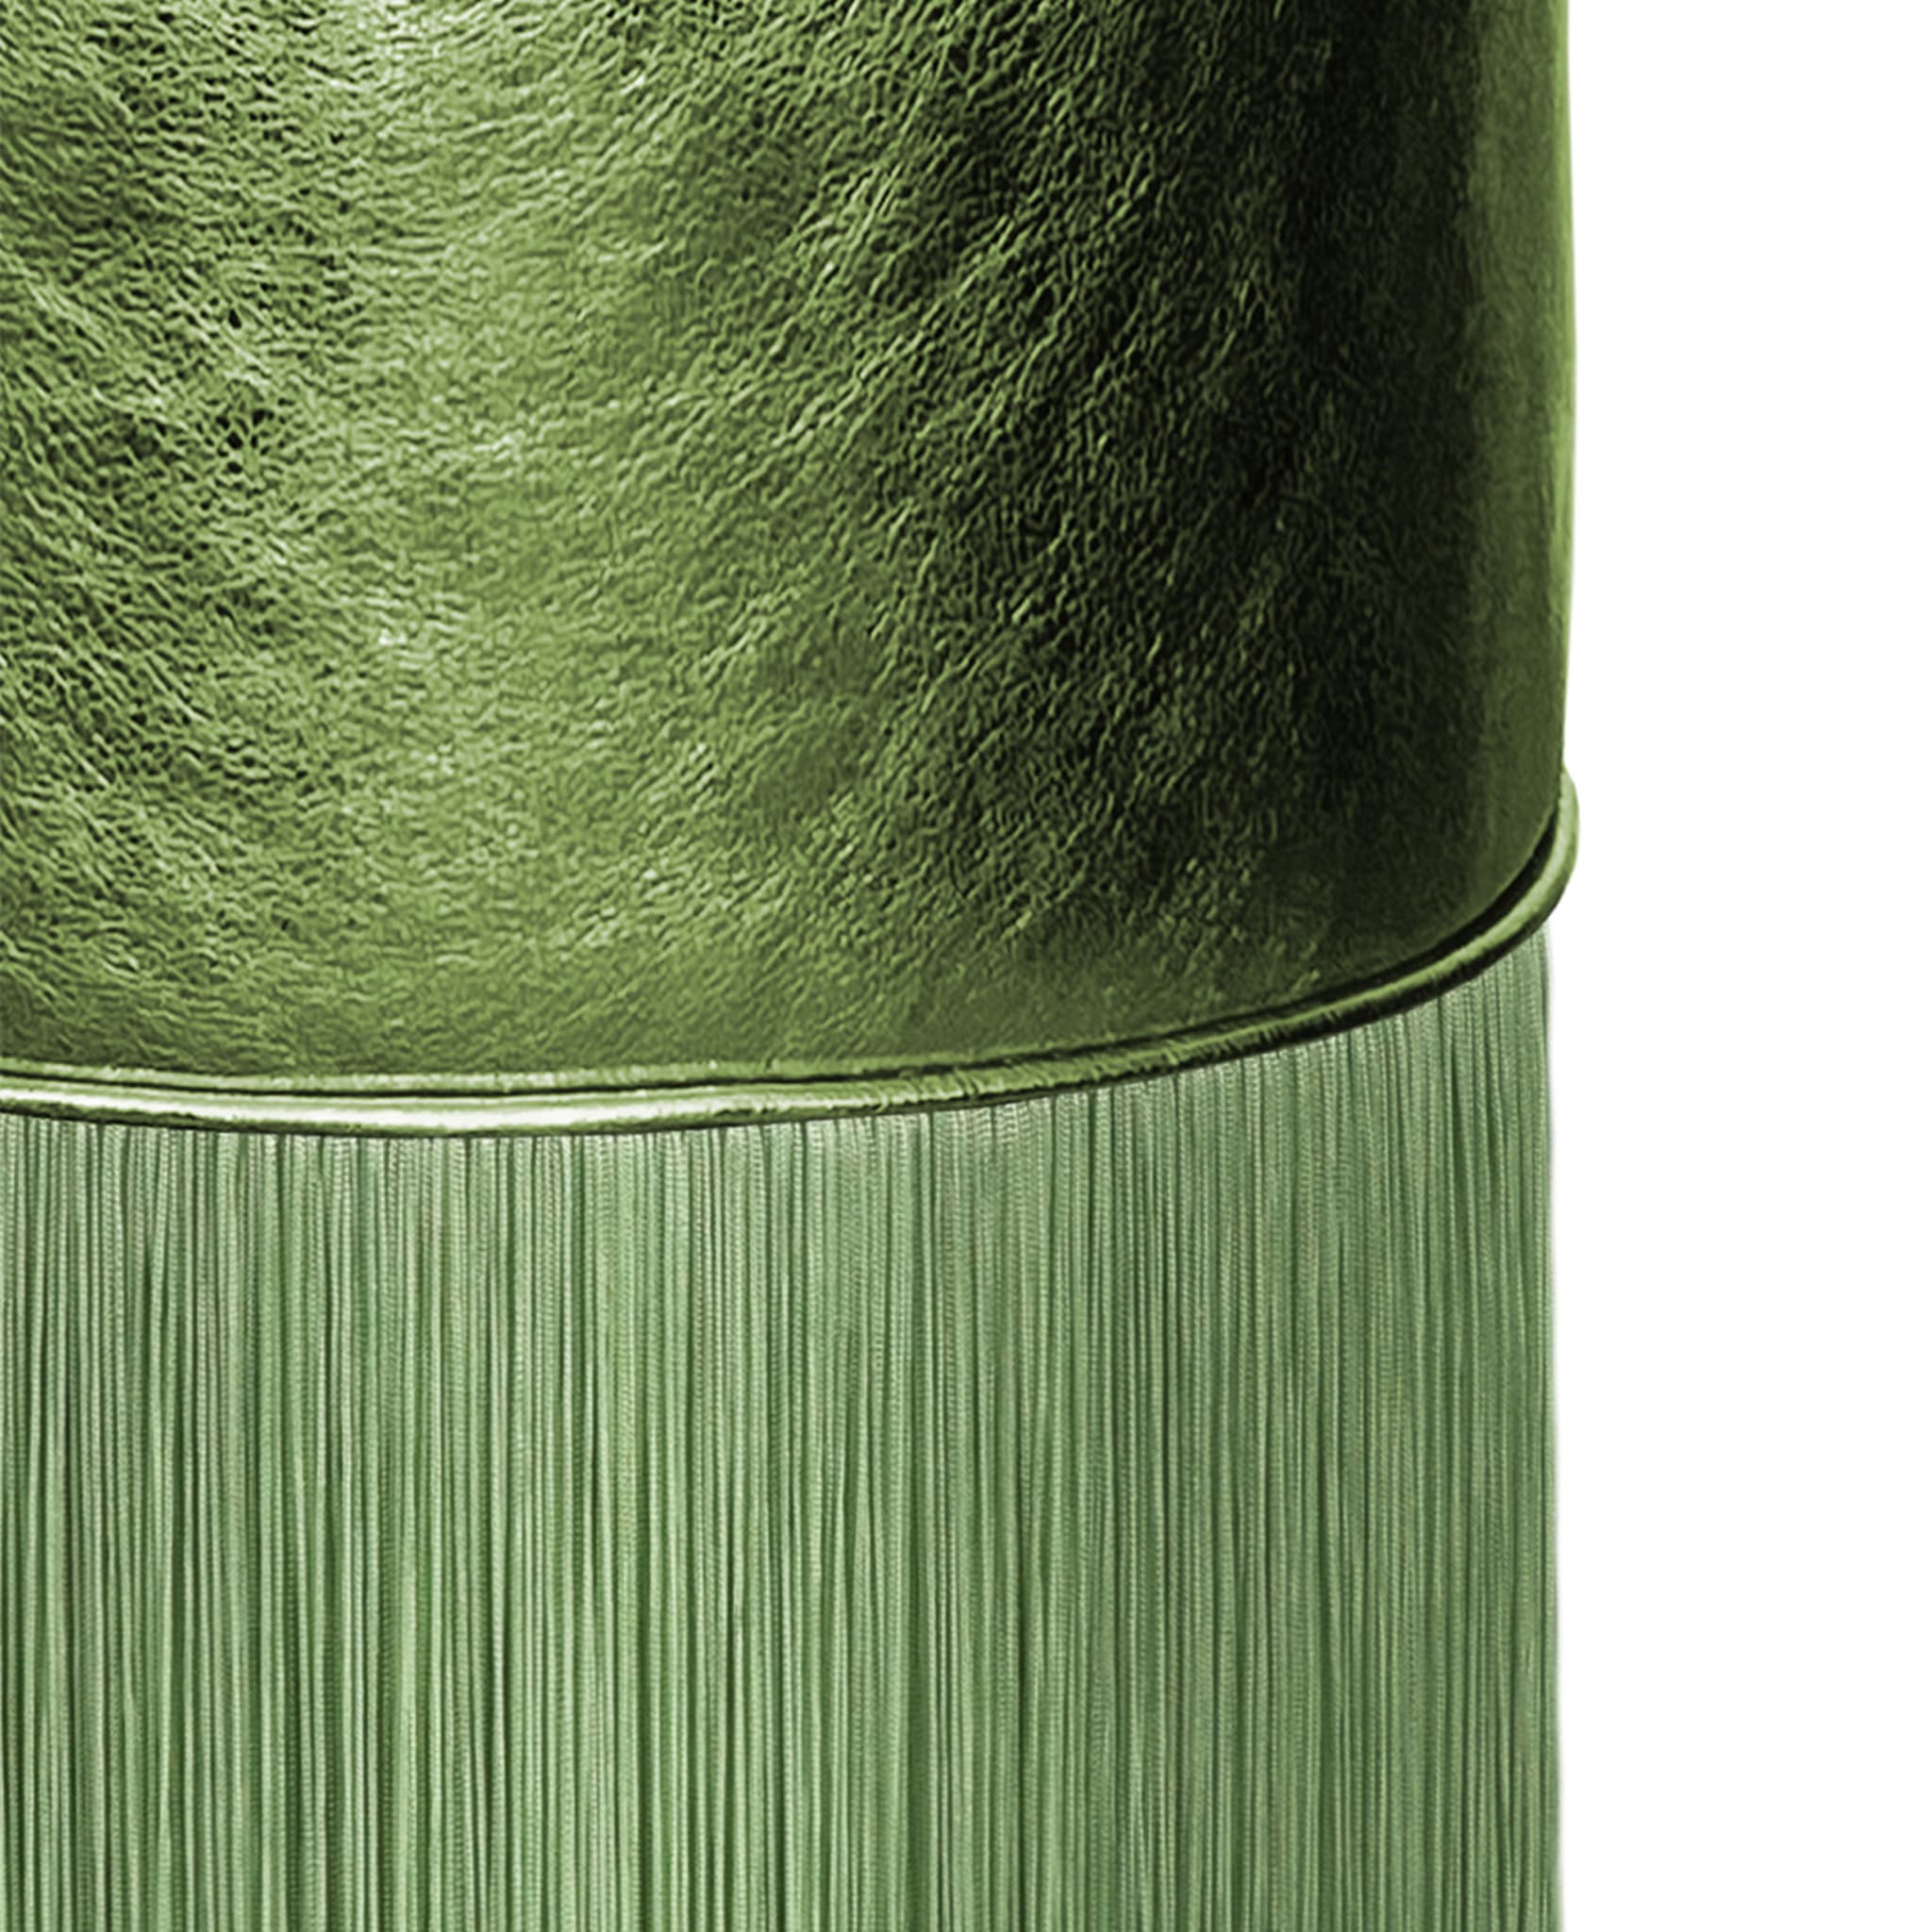 Pouf en cuir métallisé vert brillant de Lorenza Bozzoli - Vue alternative 1